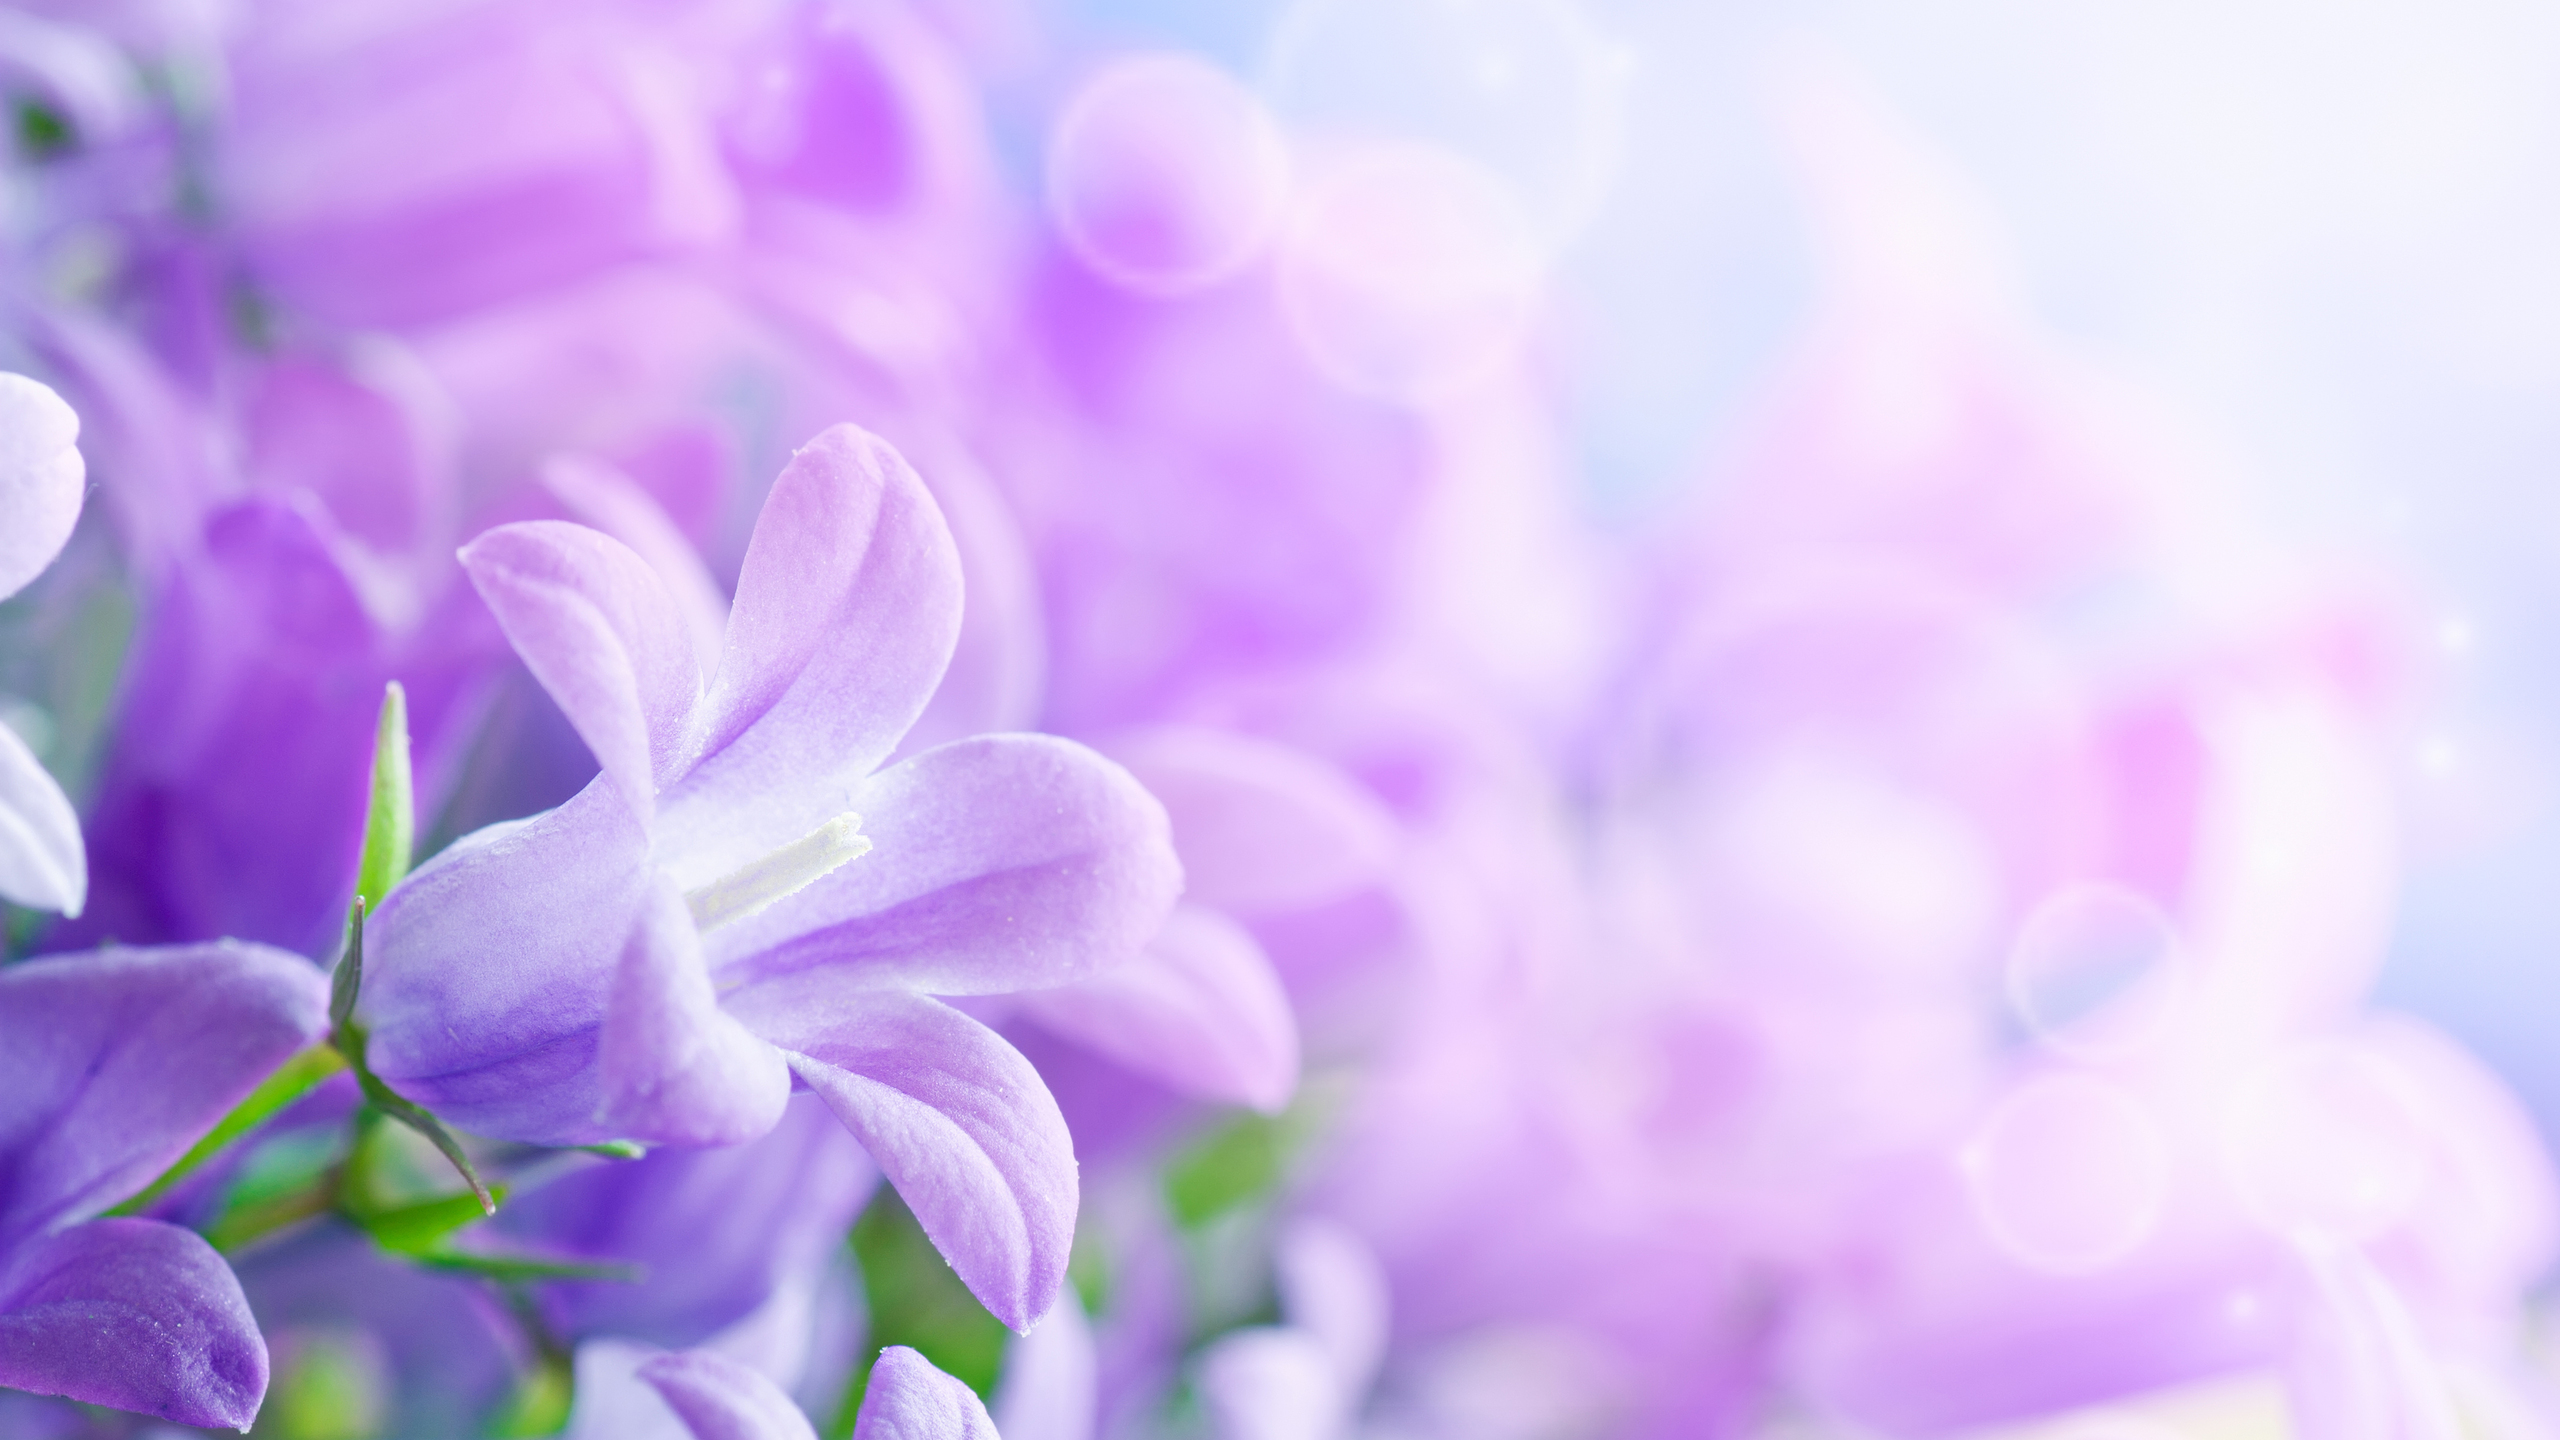 hd lilies violet wallpaper free